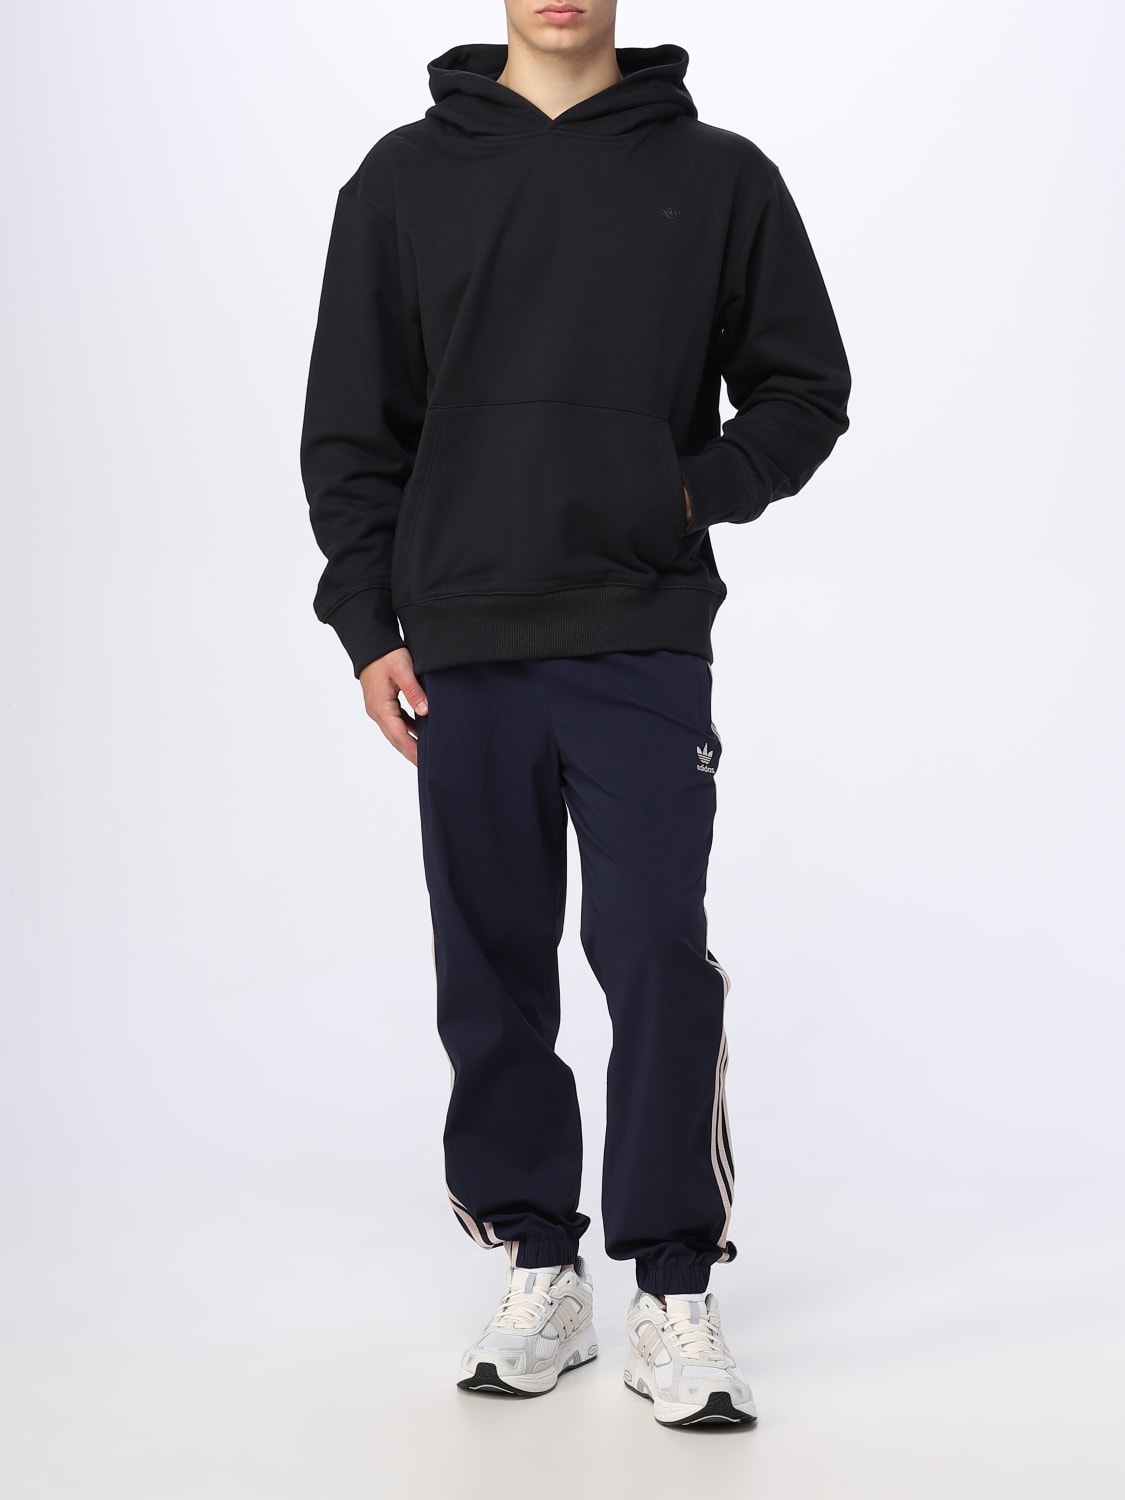 ADIDAS ORIGINALS: sweatshirt - in | Black Adidas sweatshirt HK2937 online Originals at cotton